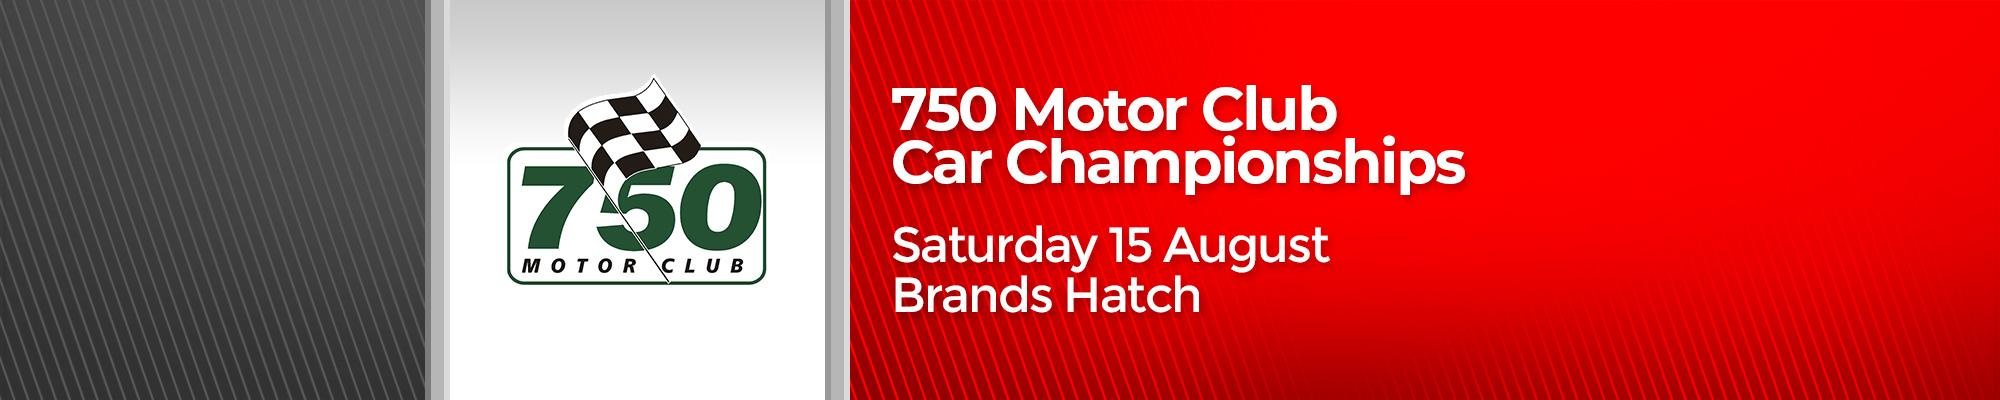  750 Motor Club Car Championships